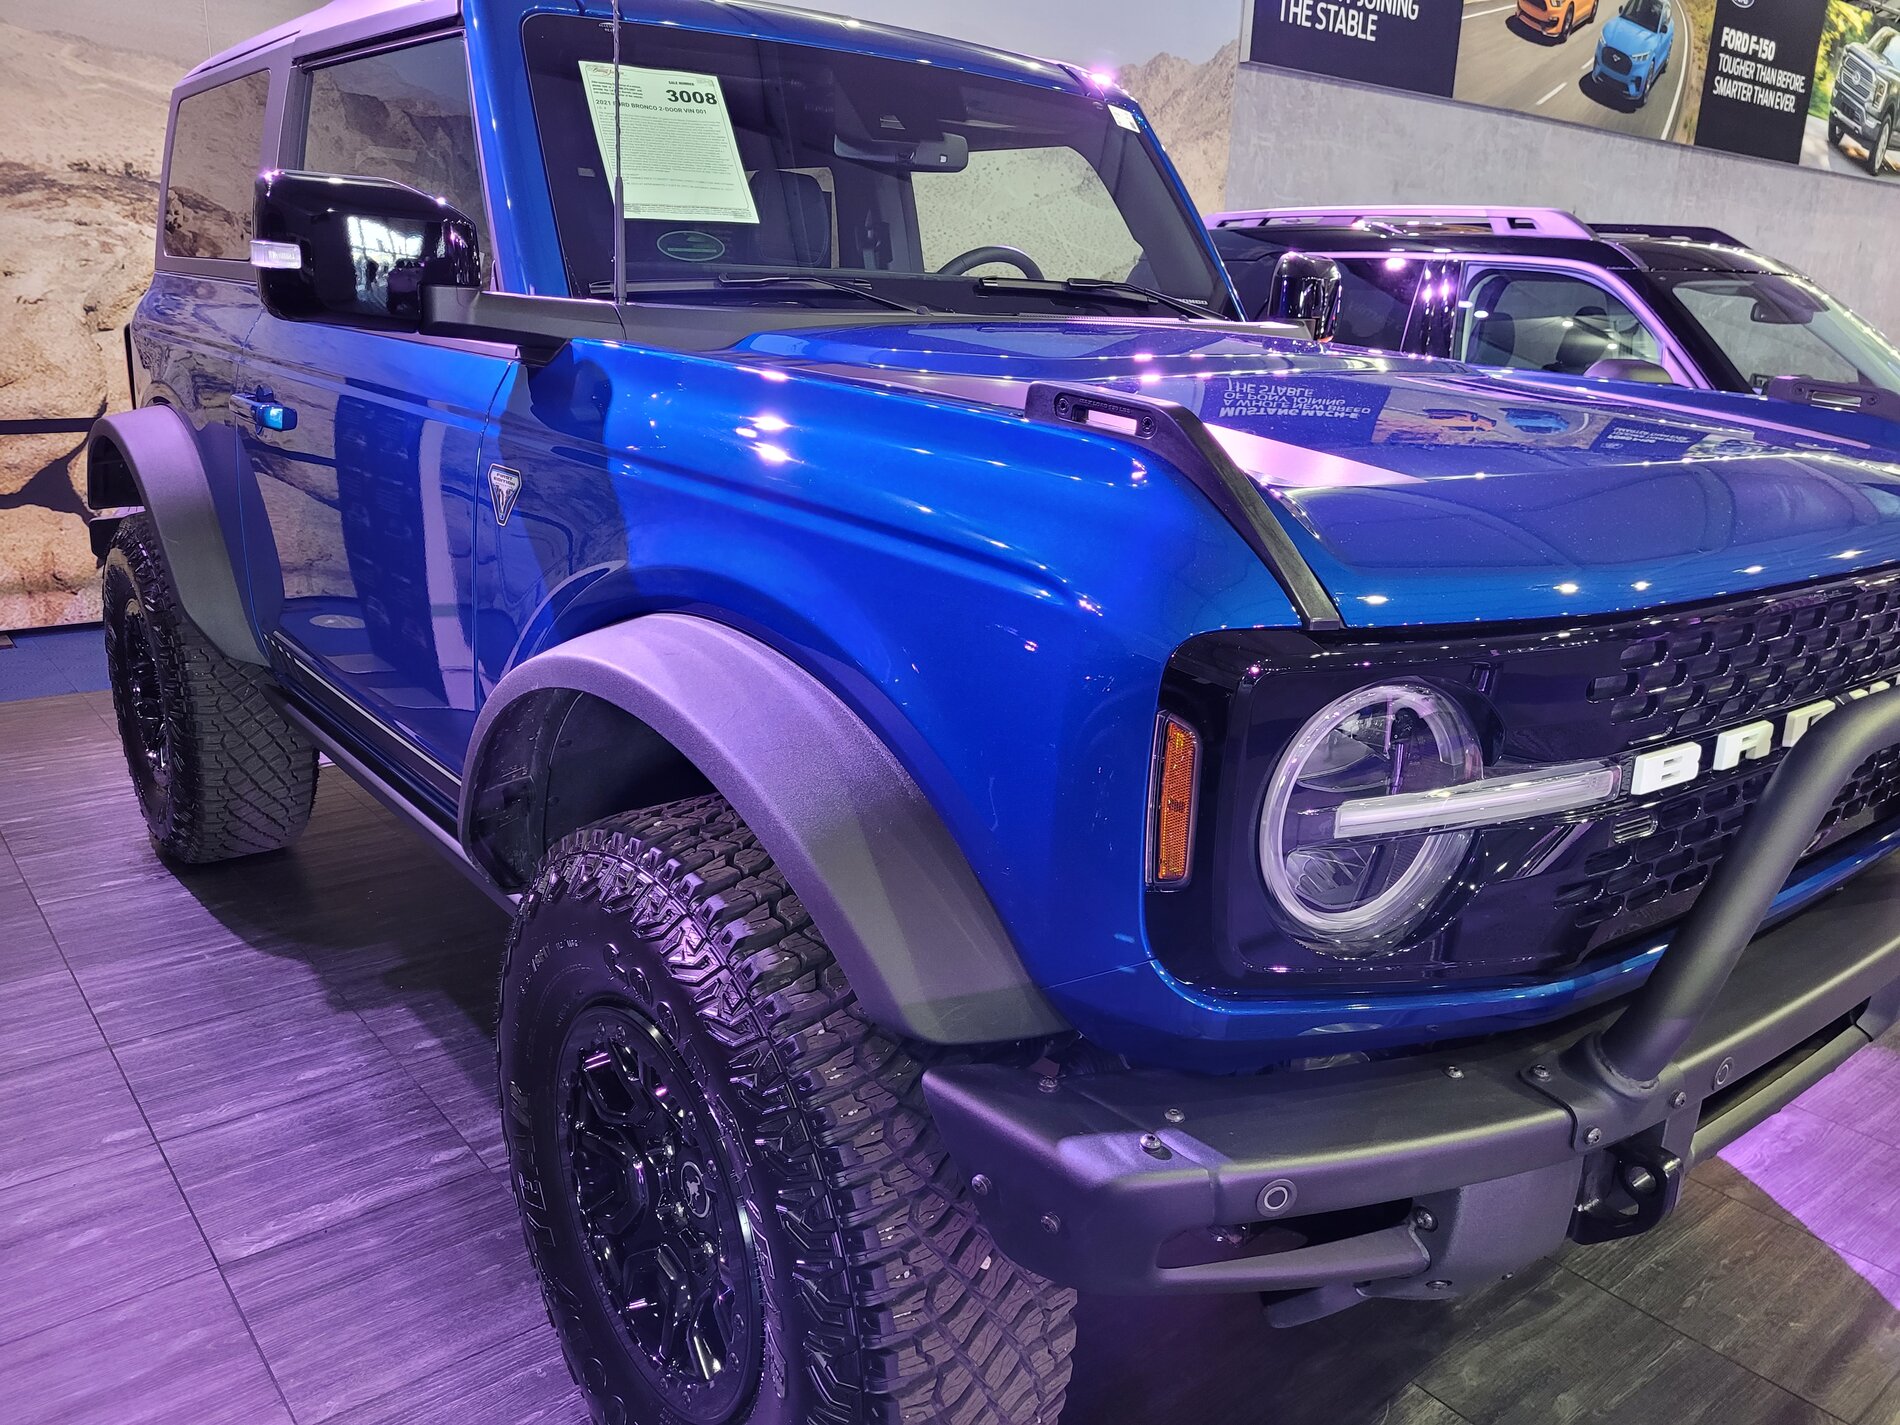 Ford Bronco Broncos at Barrett Jackson Auction: 2-Door Lightning Blue Bronco + 4-Door Antimatter Blue Bronco 20210324_120349